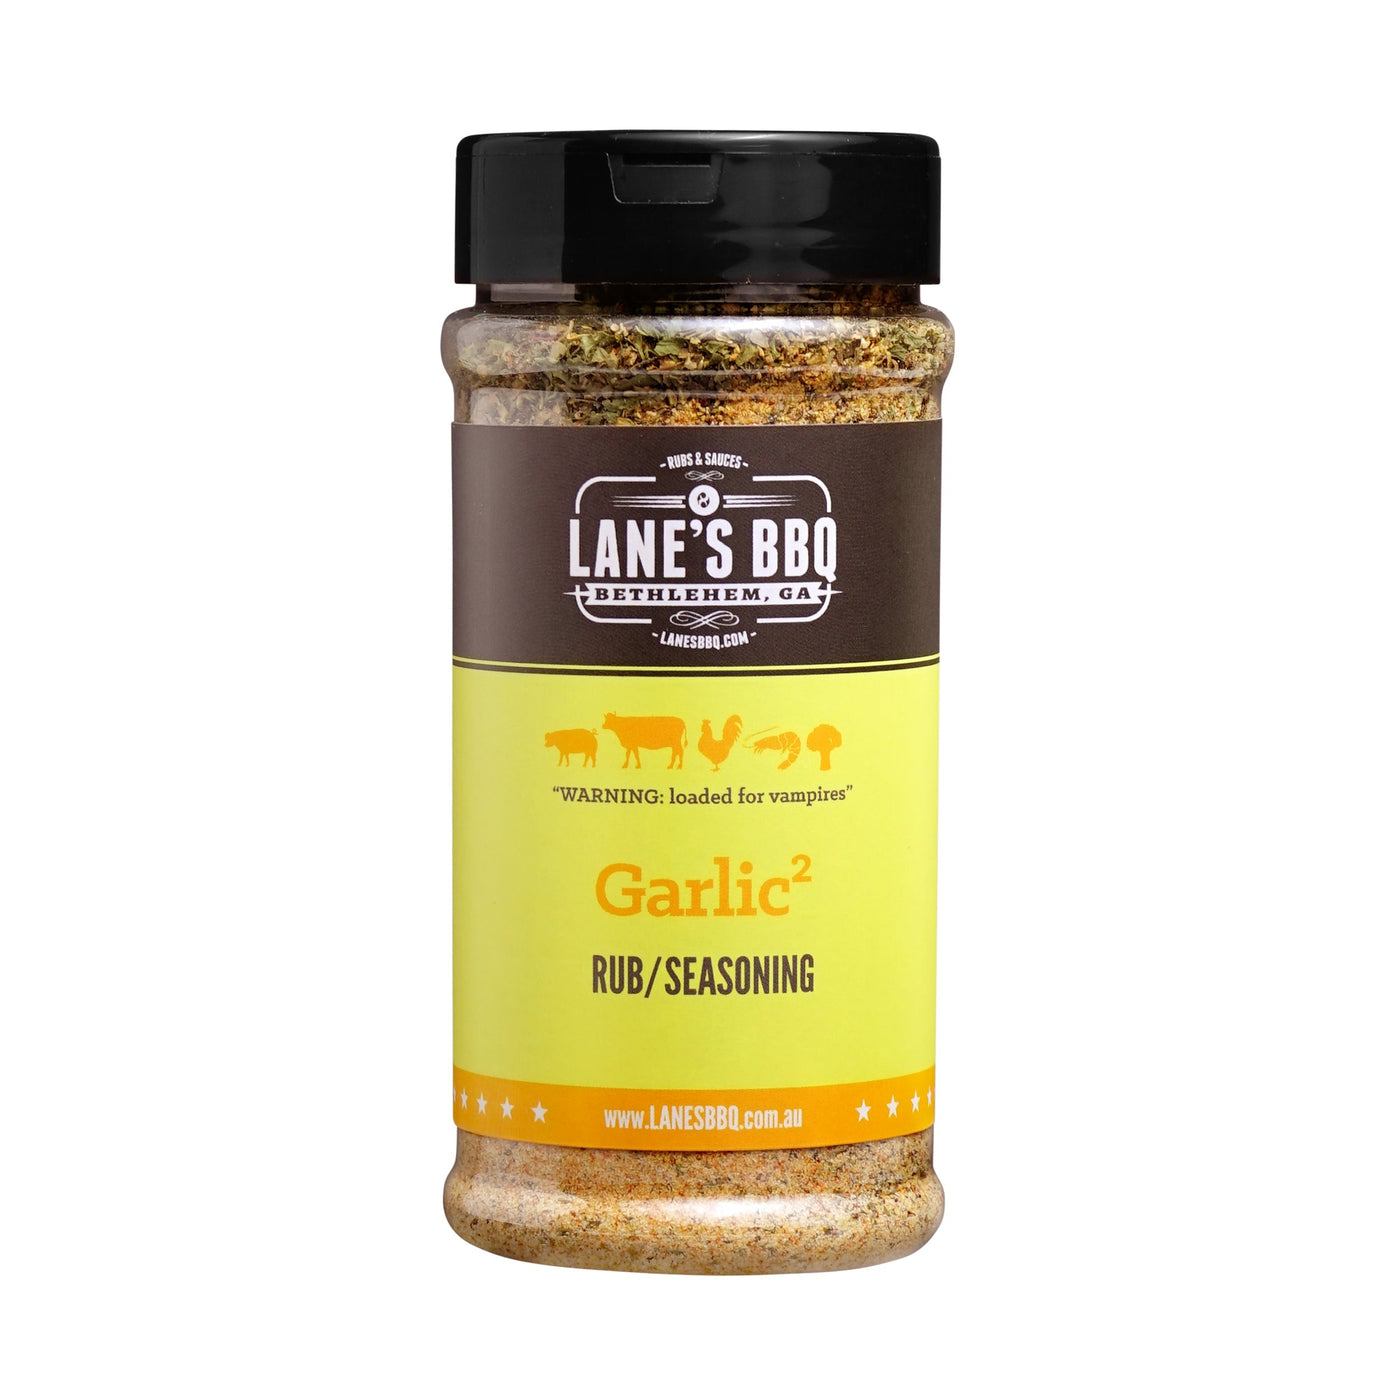 Lane's BBQ Garlic² Rub 283g